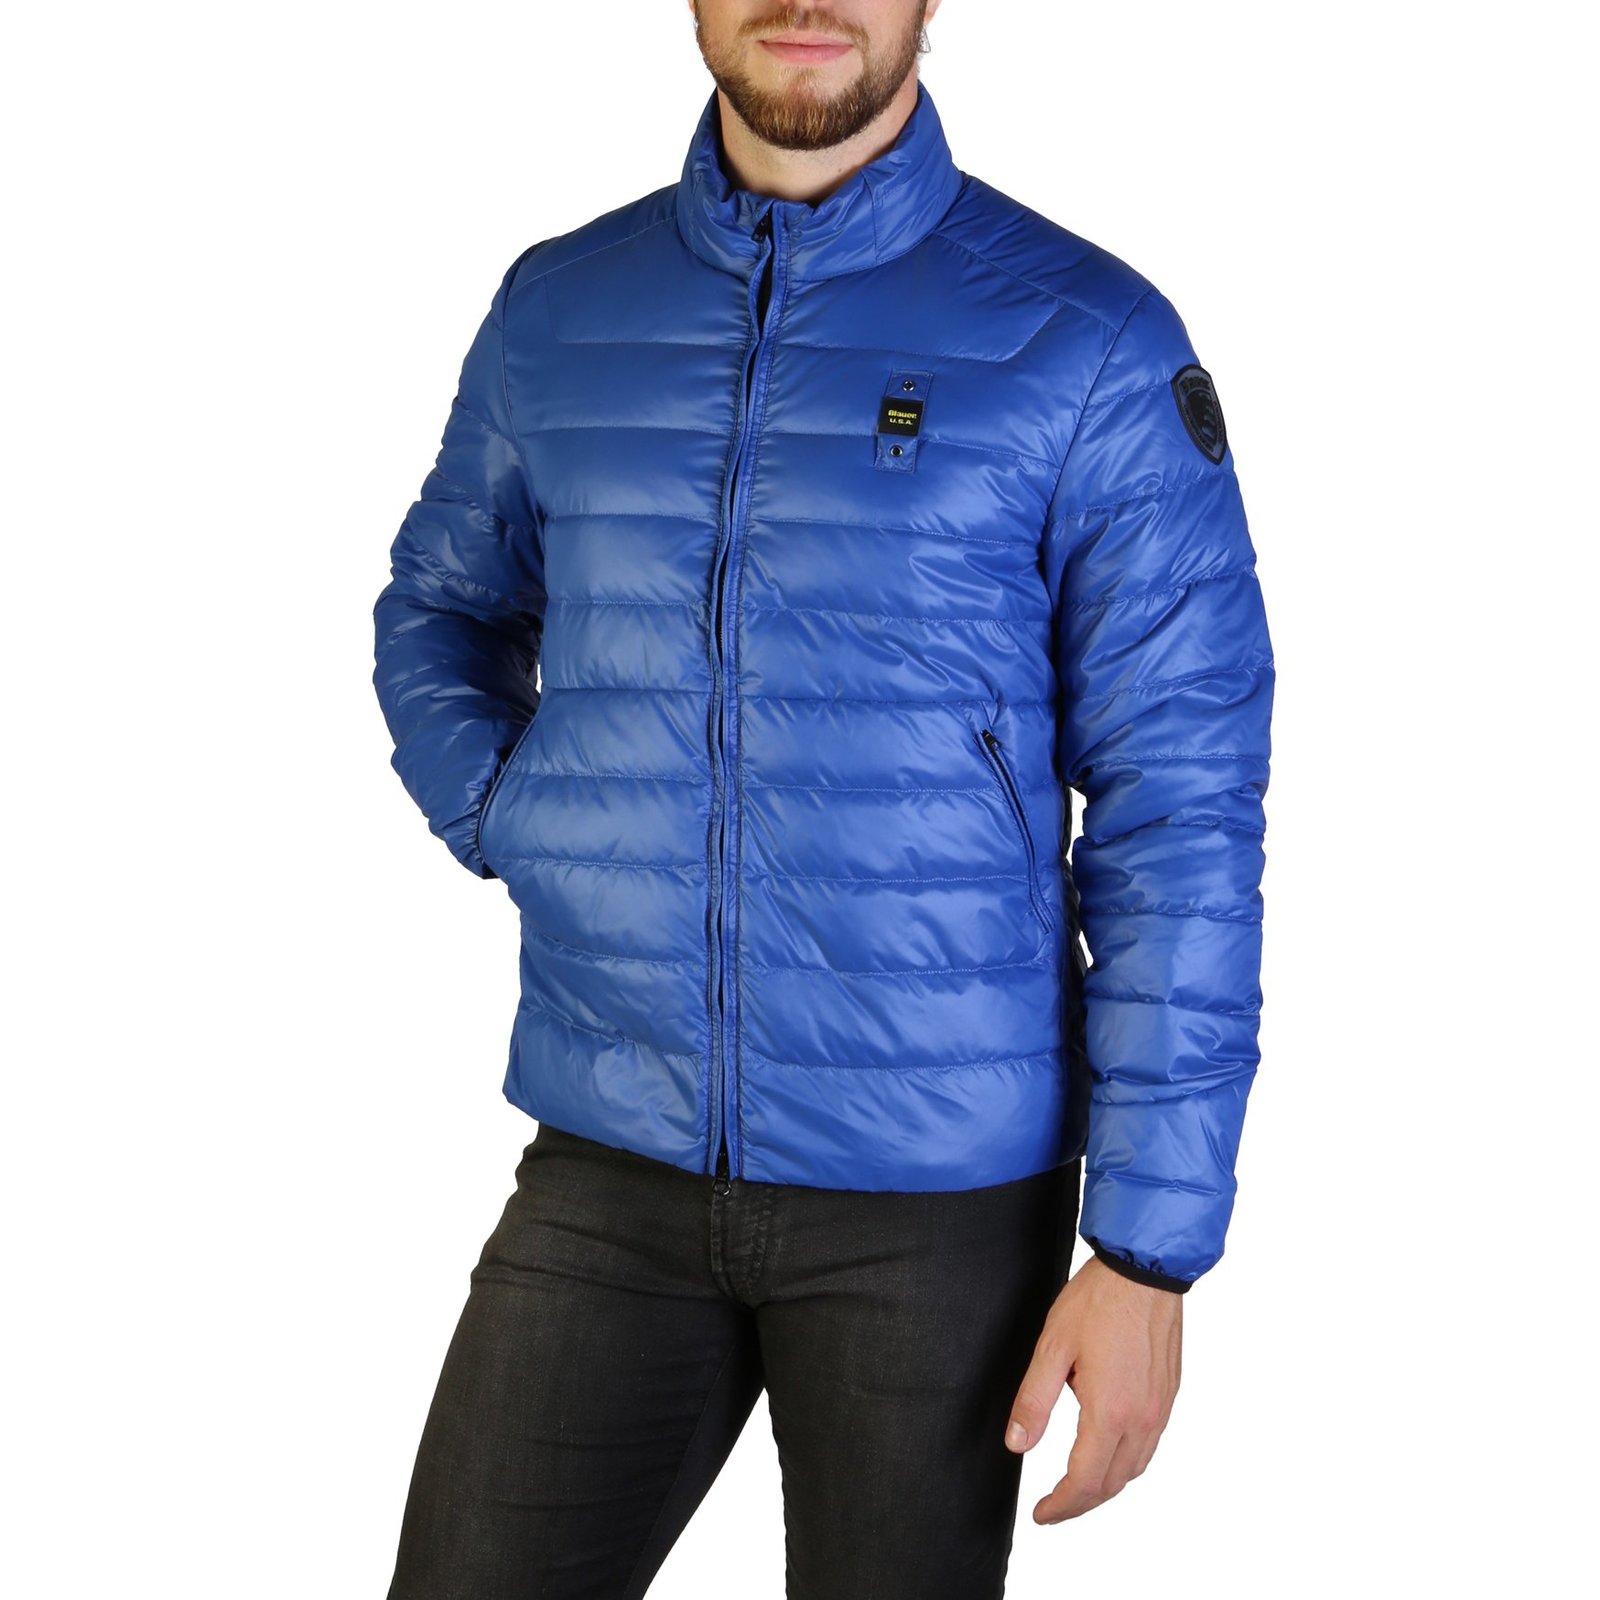 Blauer - MEN'S FALL/WINTER JACKET - Coats, Jackets & Vests